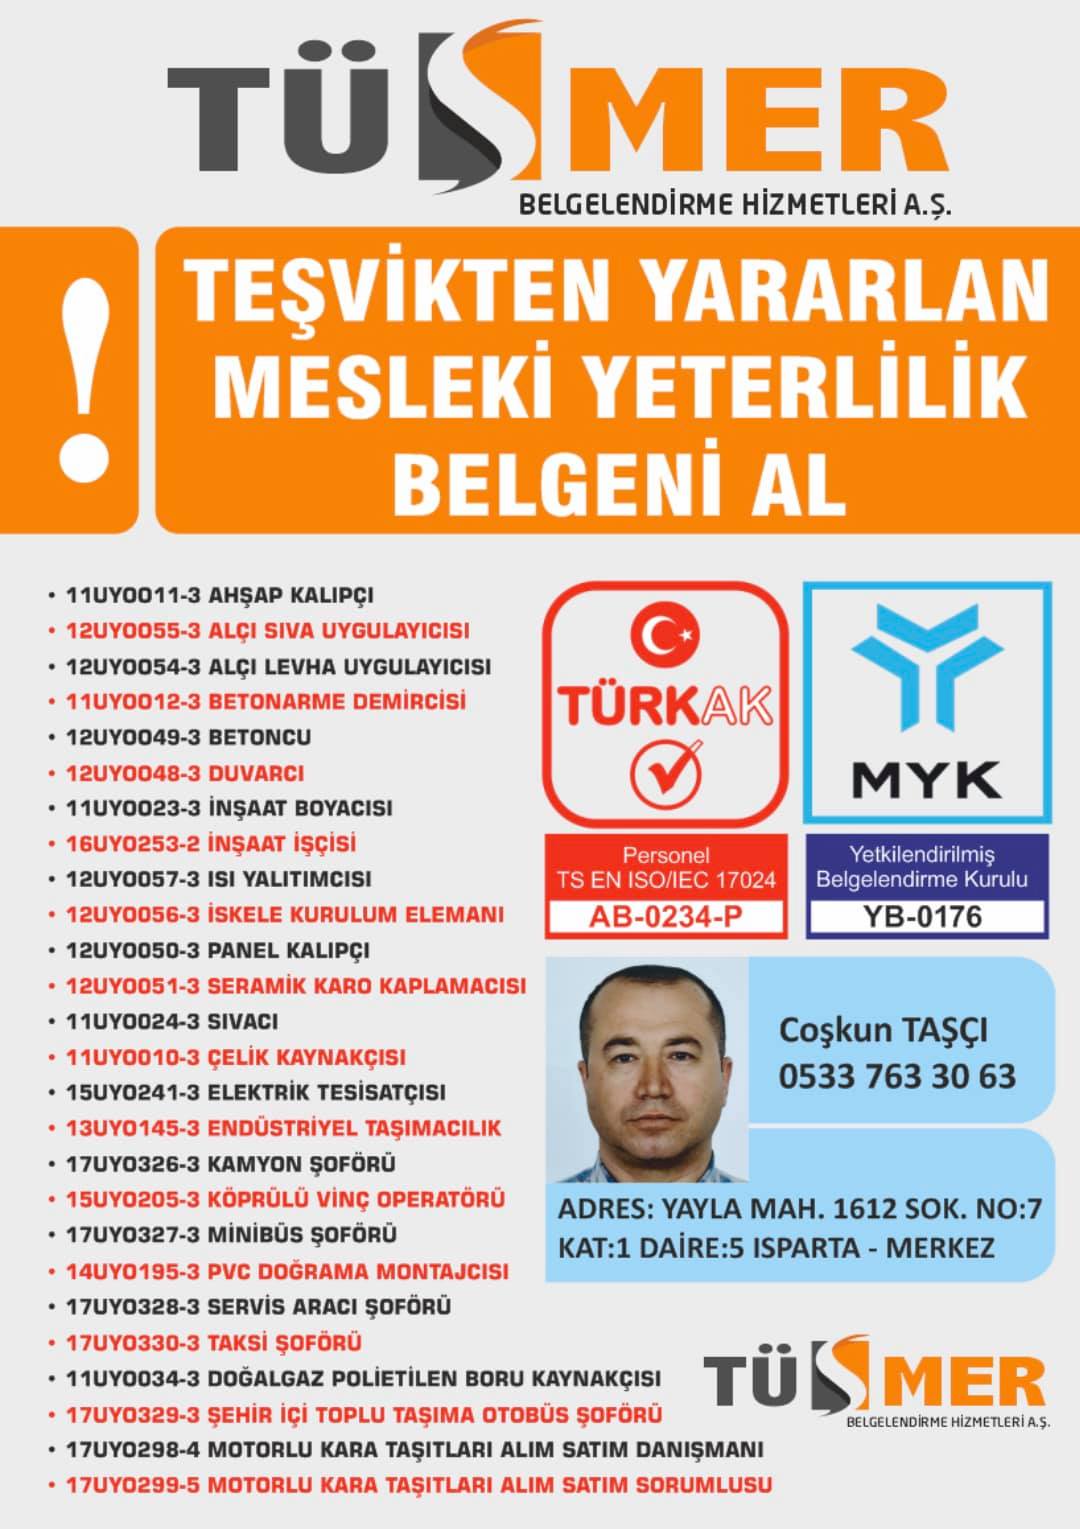 MYK MESLEKİ YETERLİLİK BELGESİ Mehmet Akif Ersoy Kâğıthane İstanbul